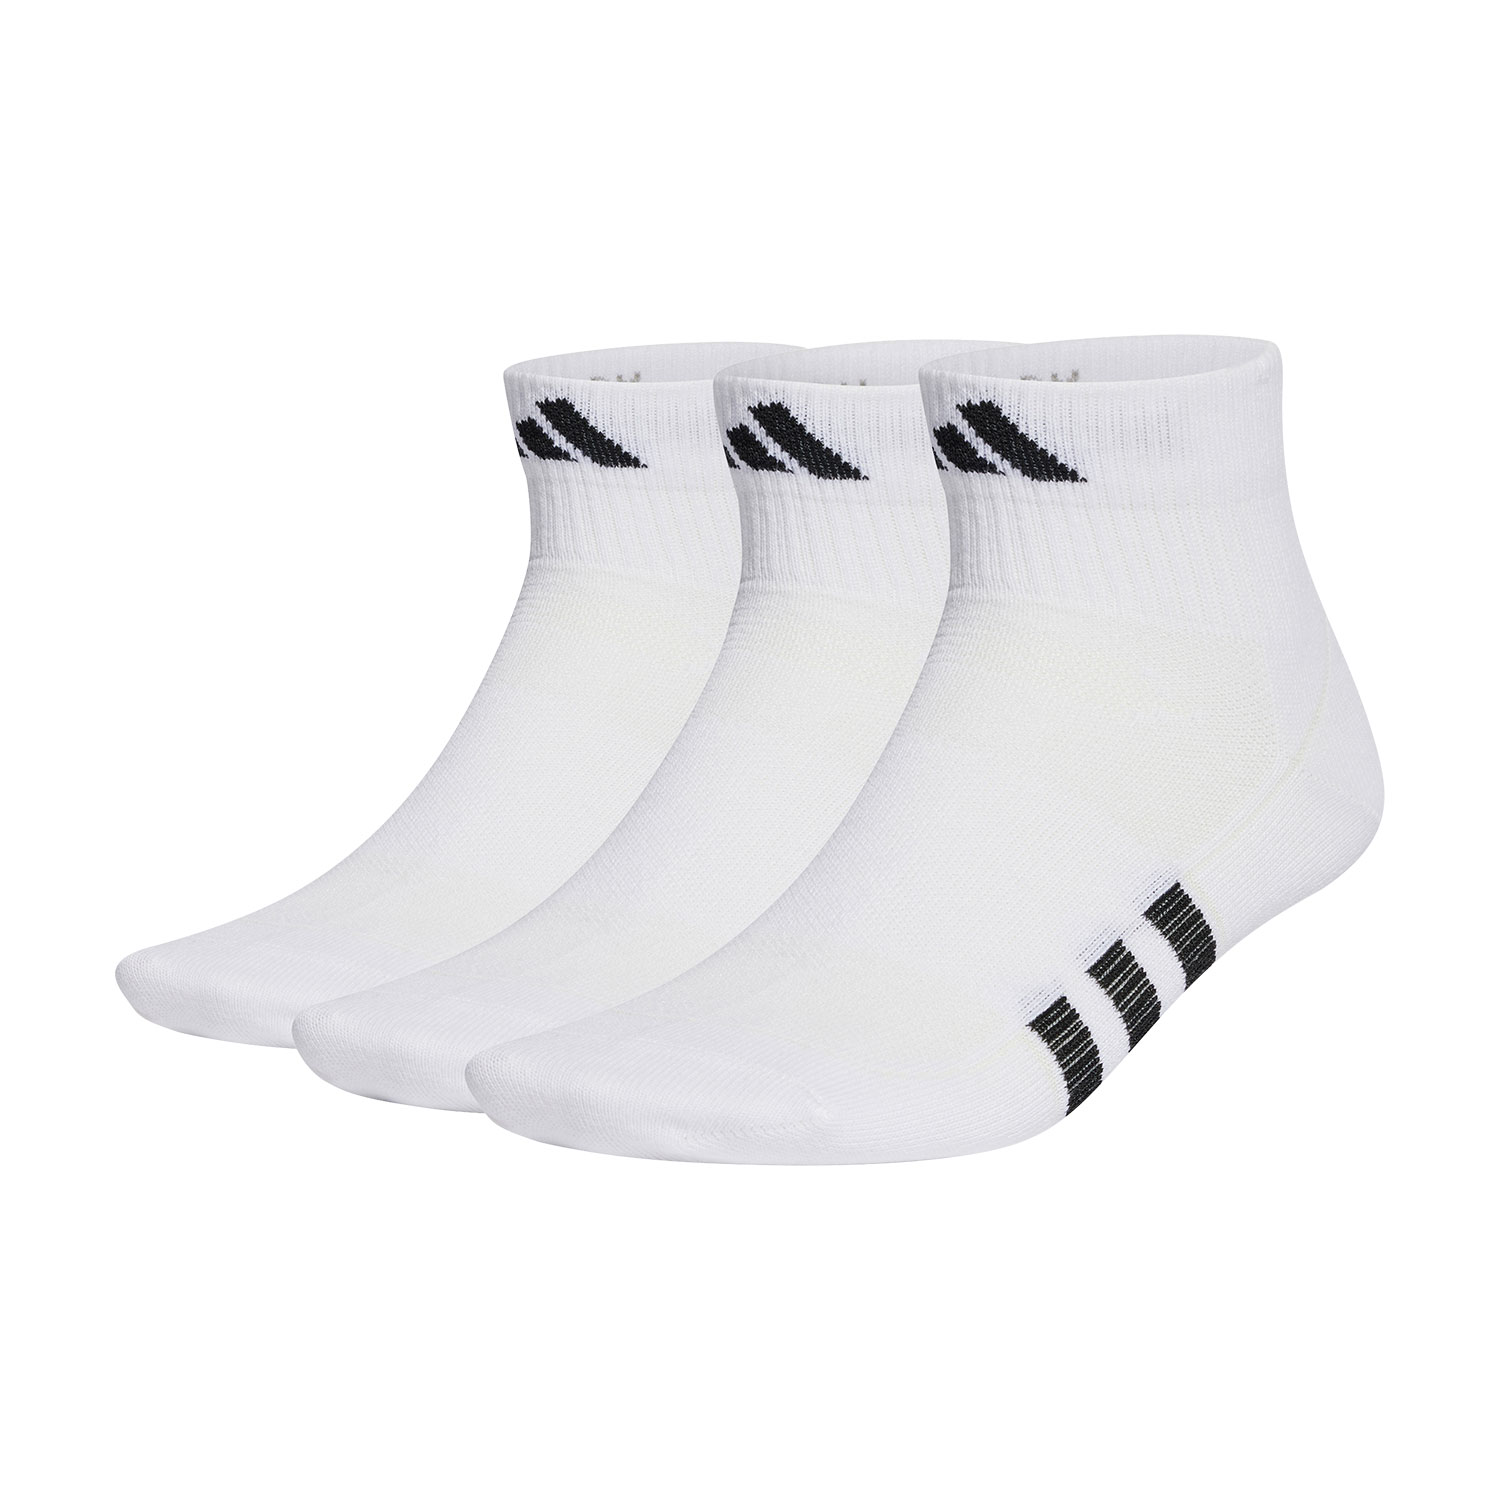 adidas Performance Light x 3 Running Socks - White